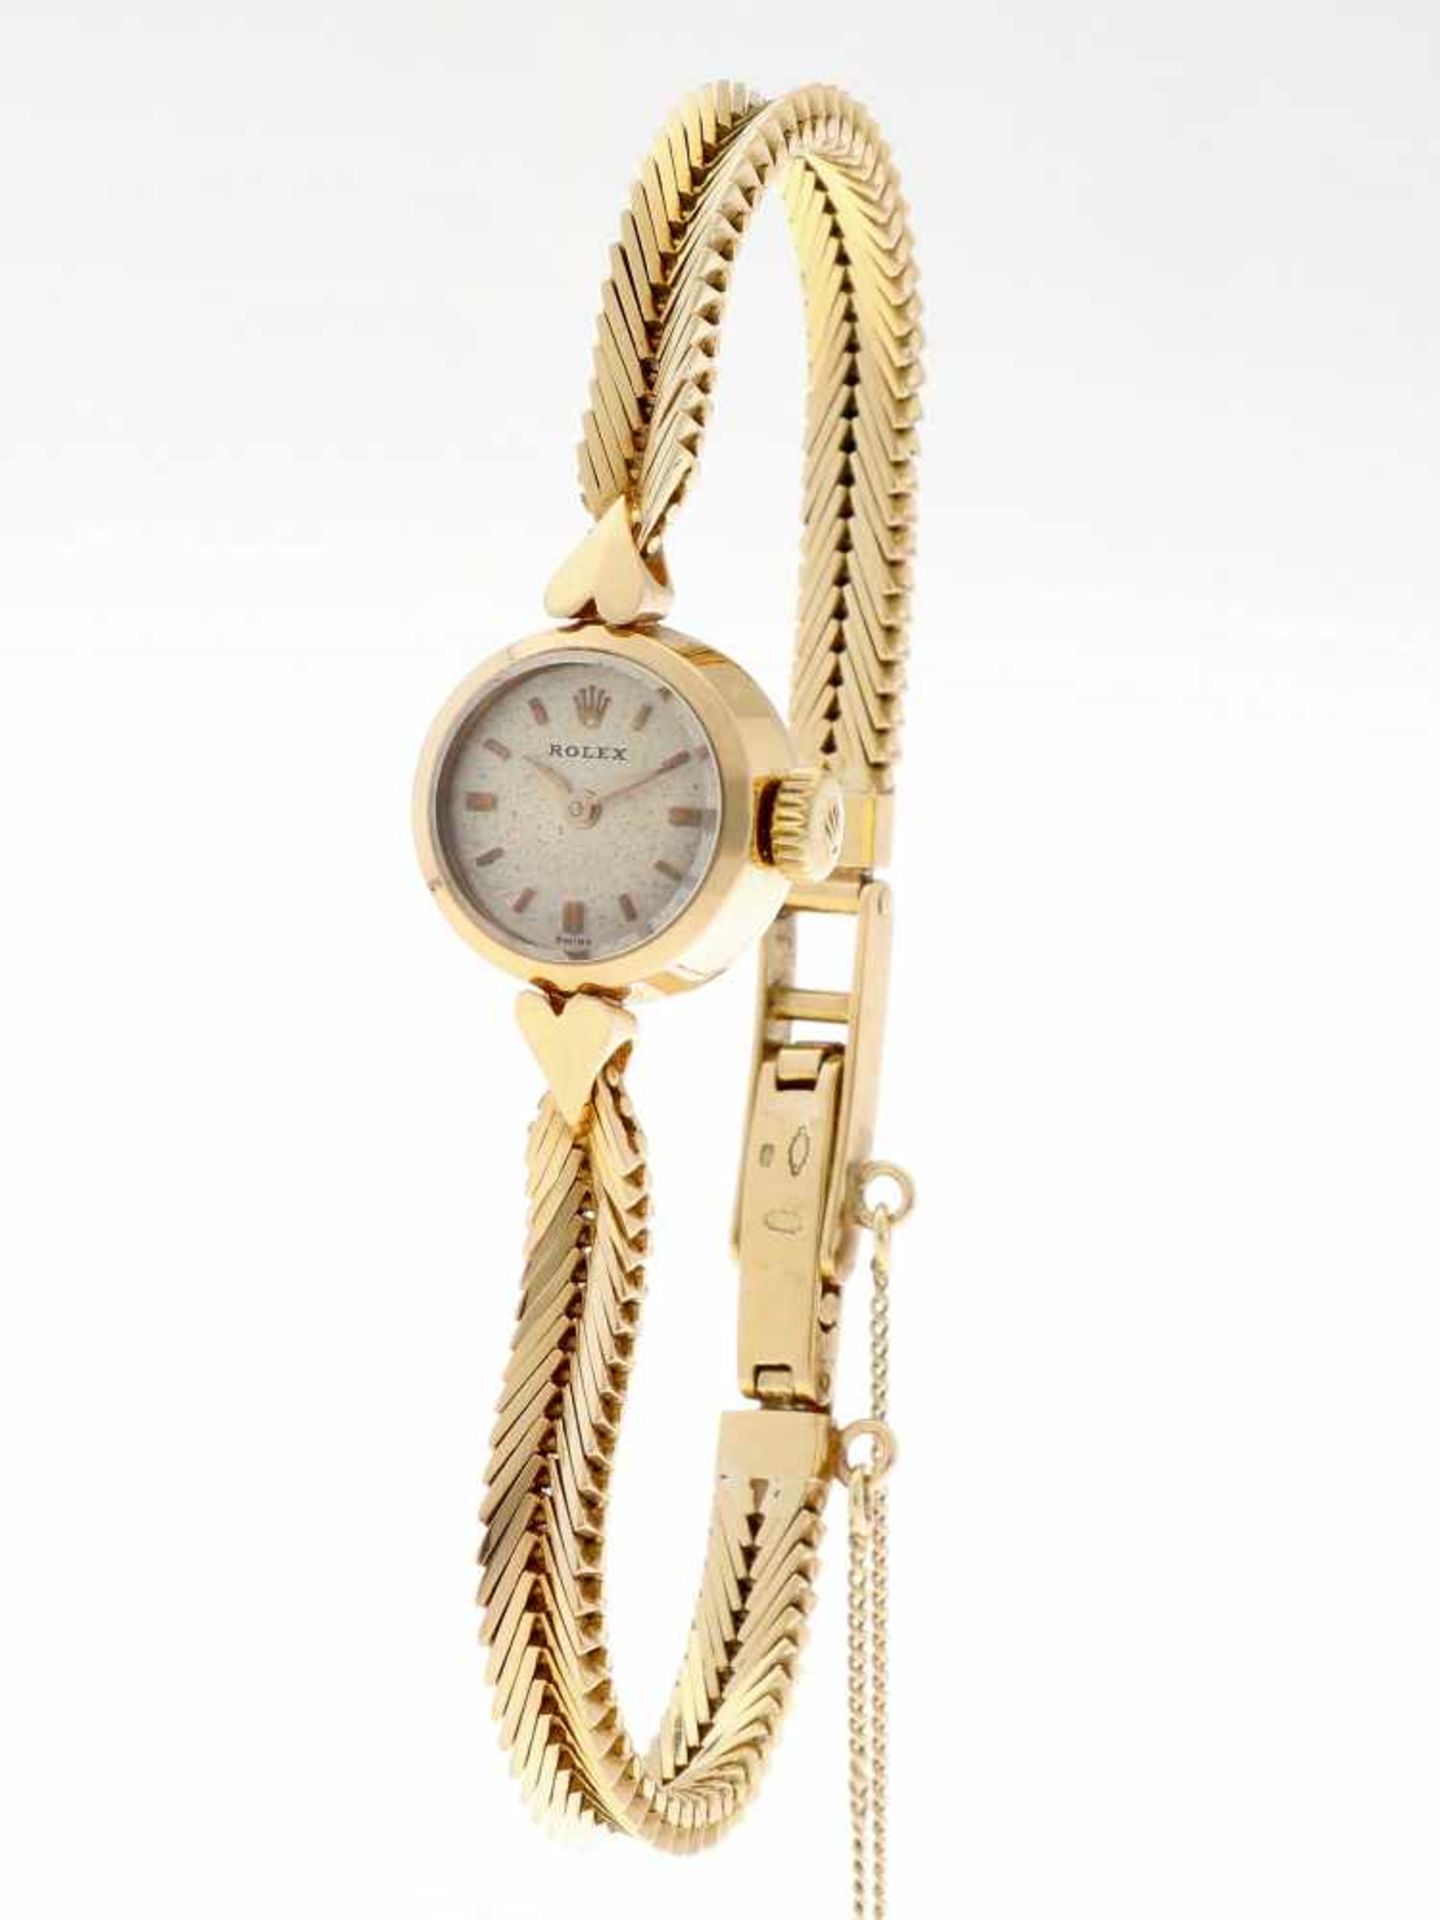 Rolex vintage - Ladies watch - Manual winding - Ca. 1955. - Bild 2 aus 7